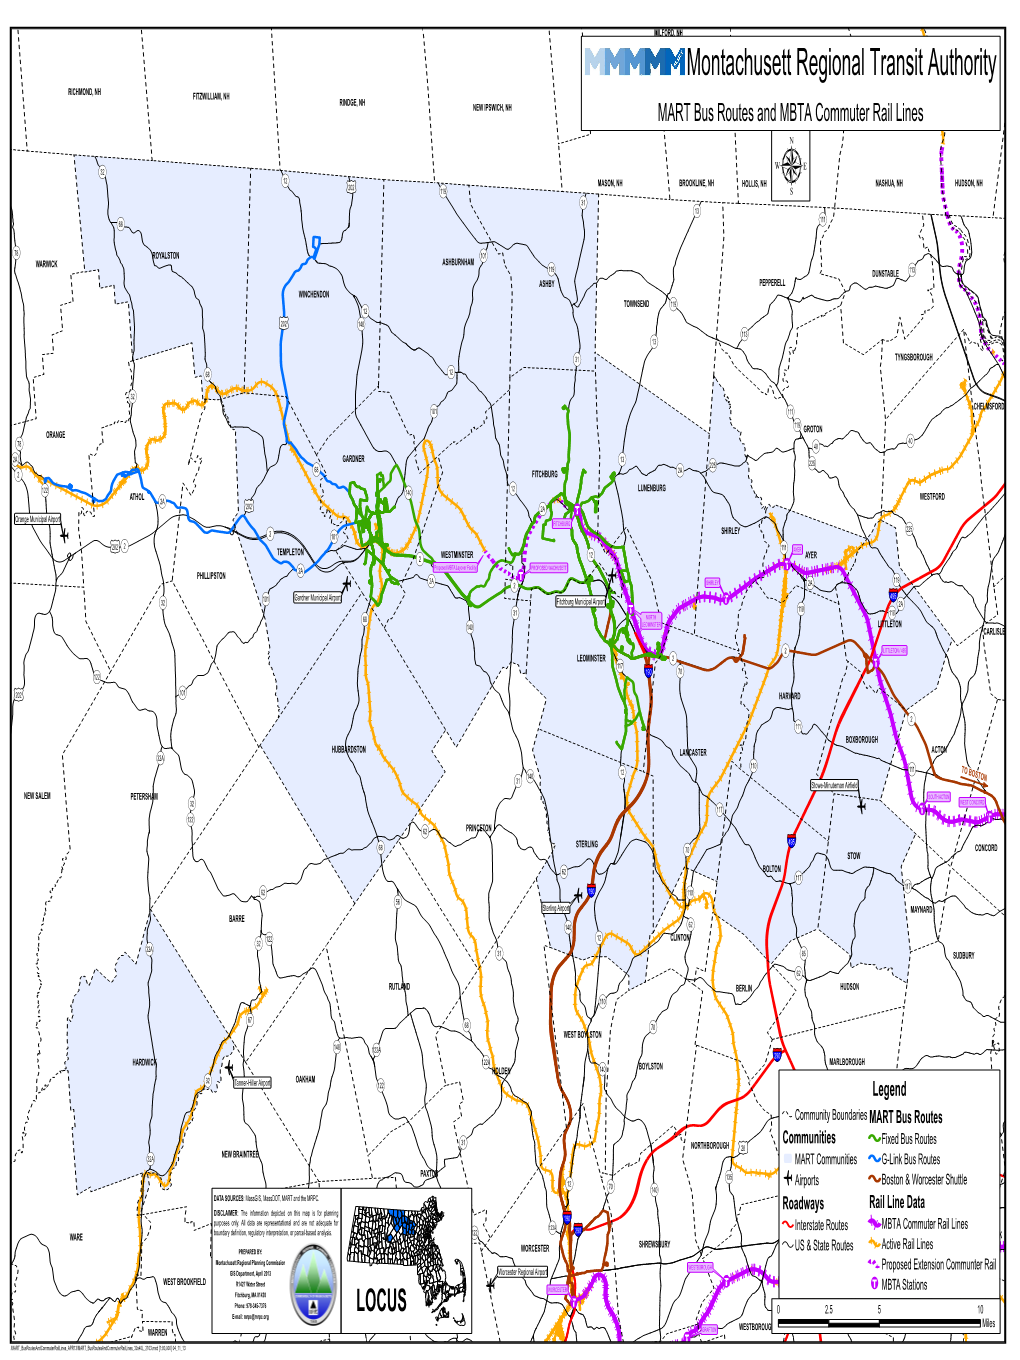 MART Bus Routes and Commuter Rail Line